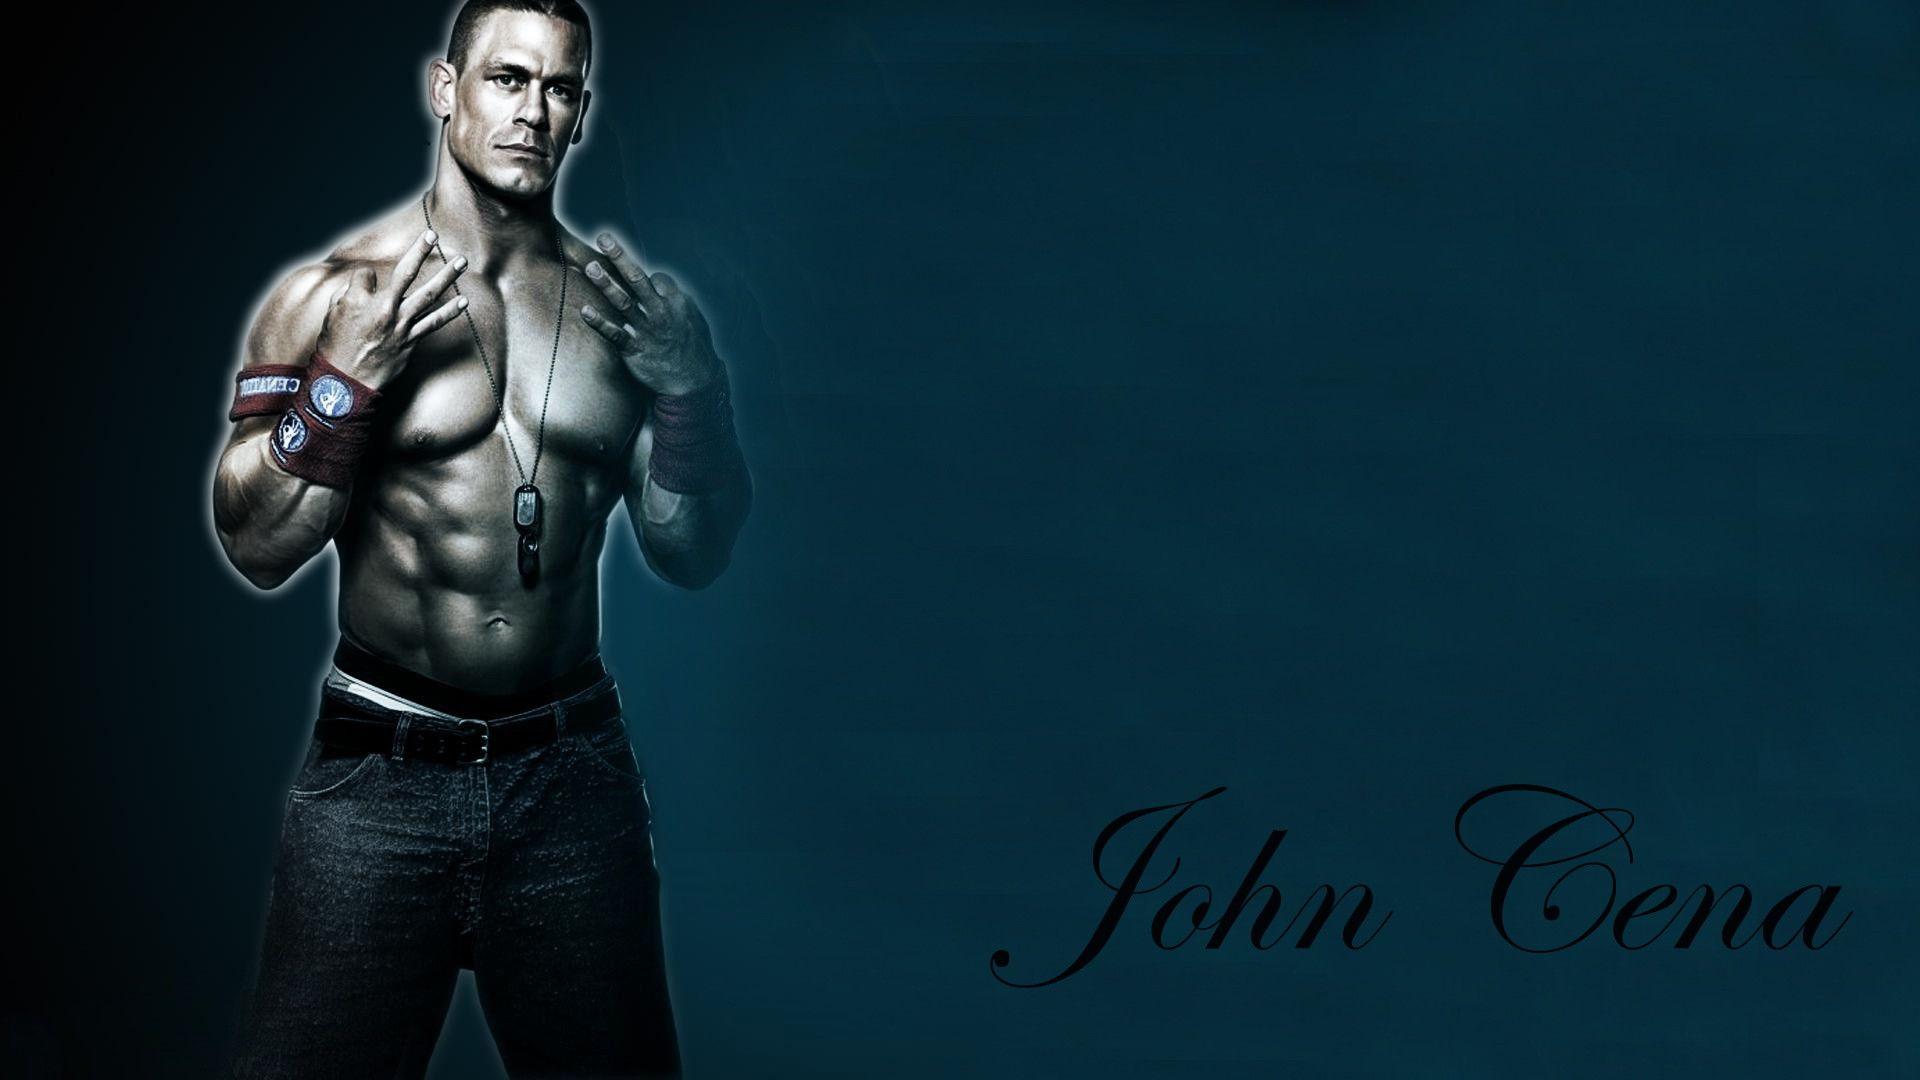 Free Download John Cena Wallpaper HD